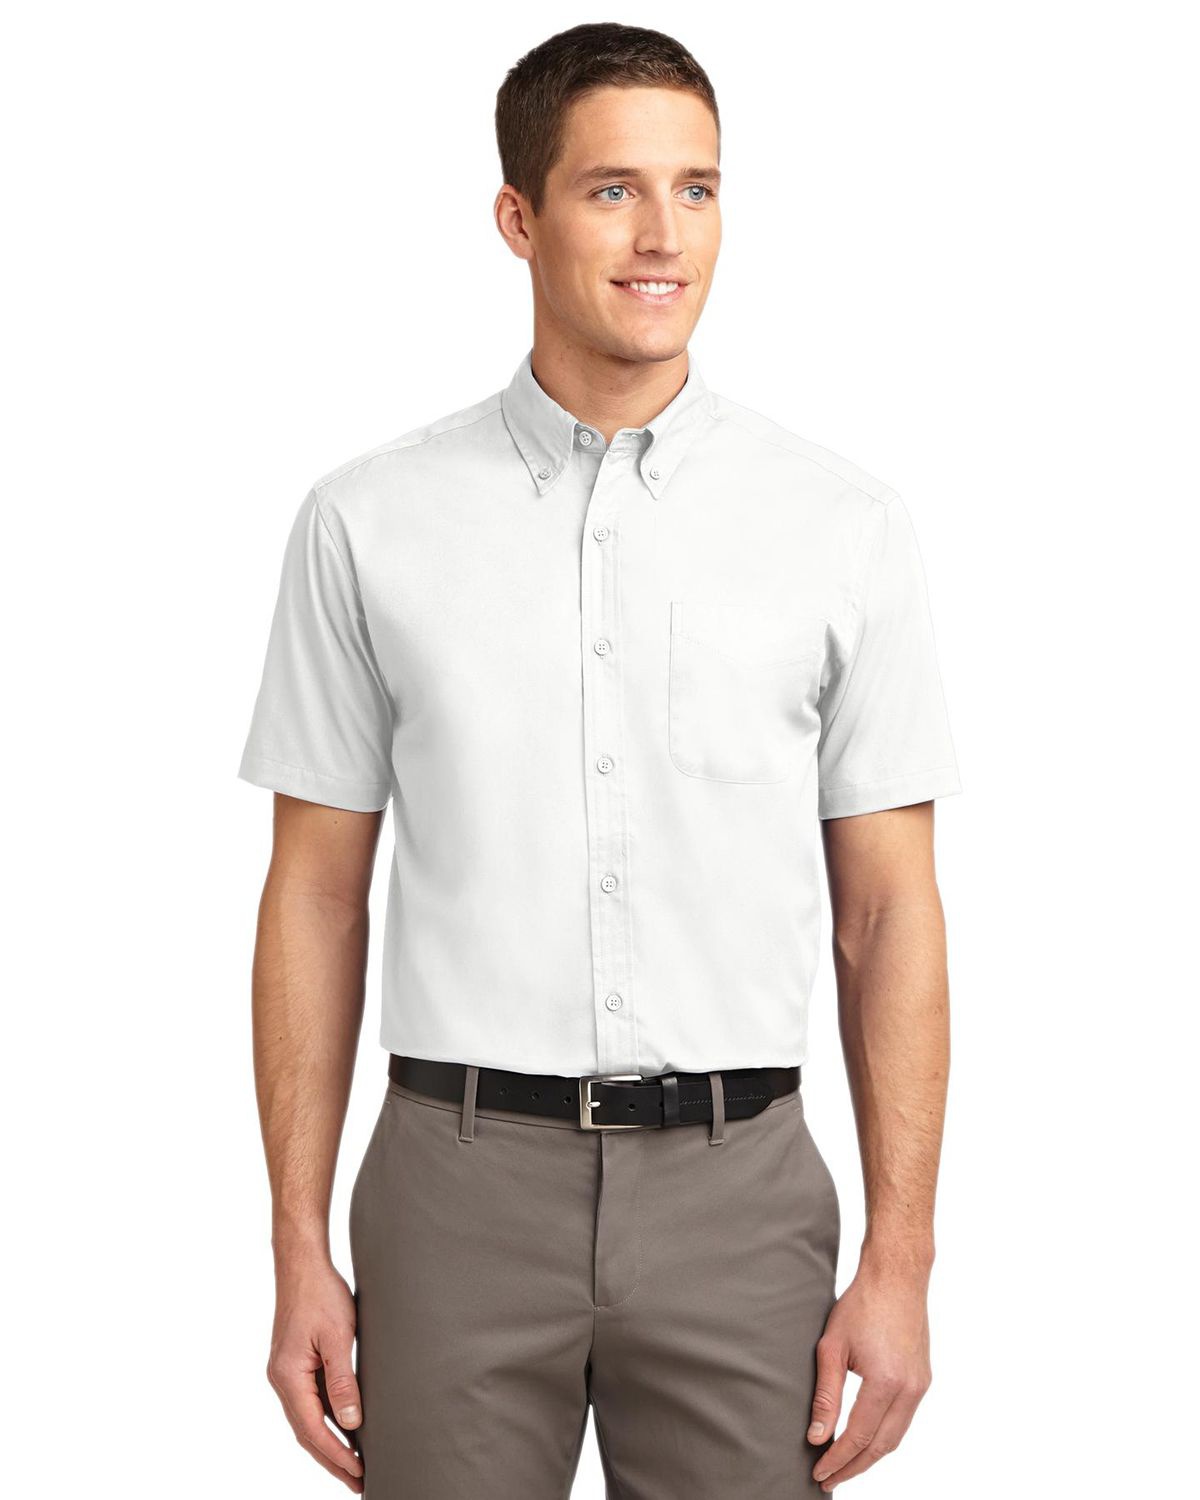 33% Off Port Authority S508 Men Short Sleeve Easy Care Shirt